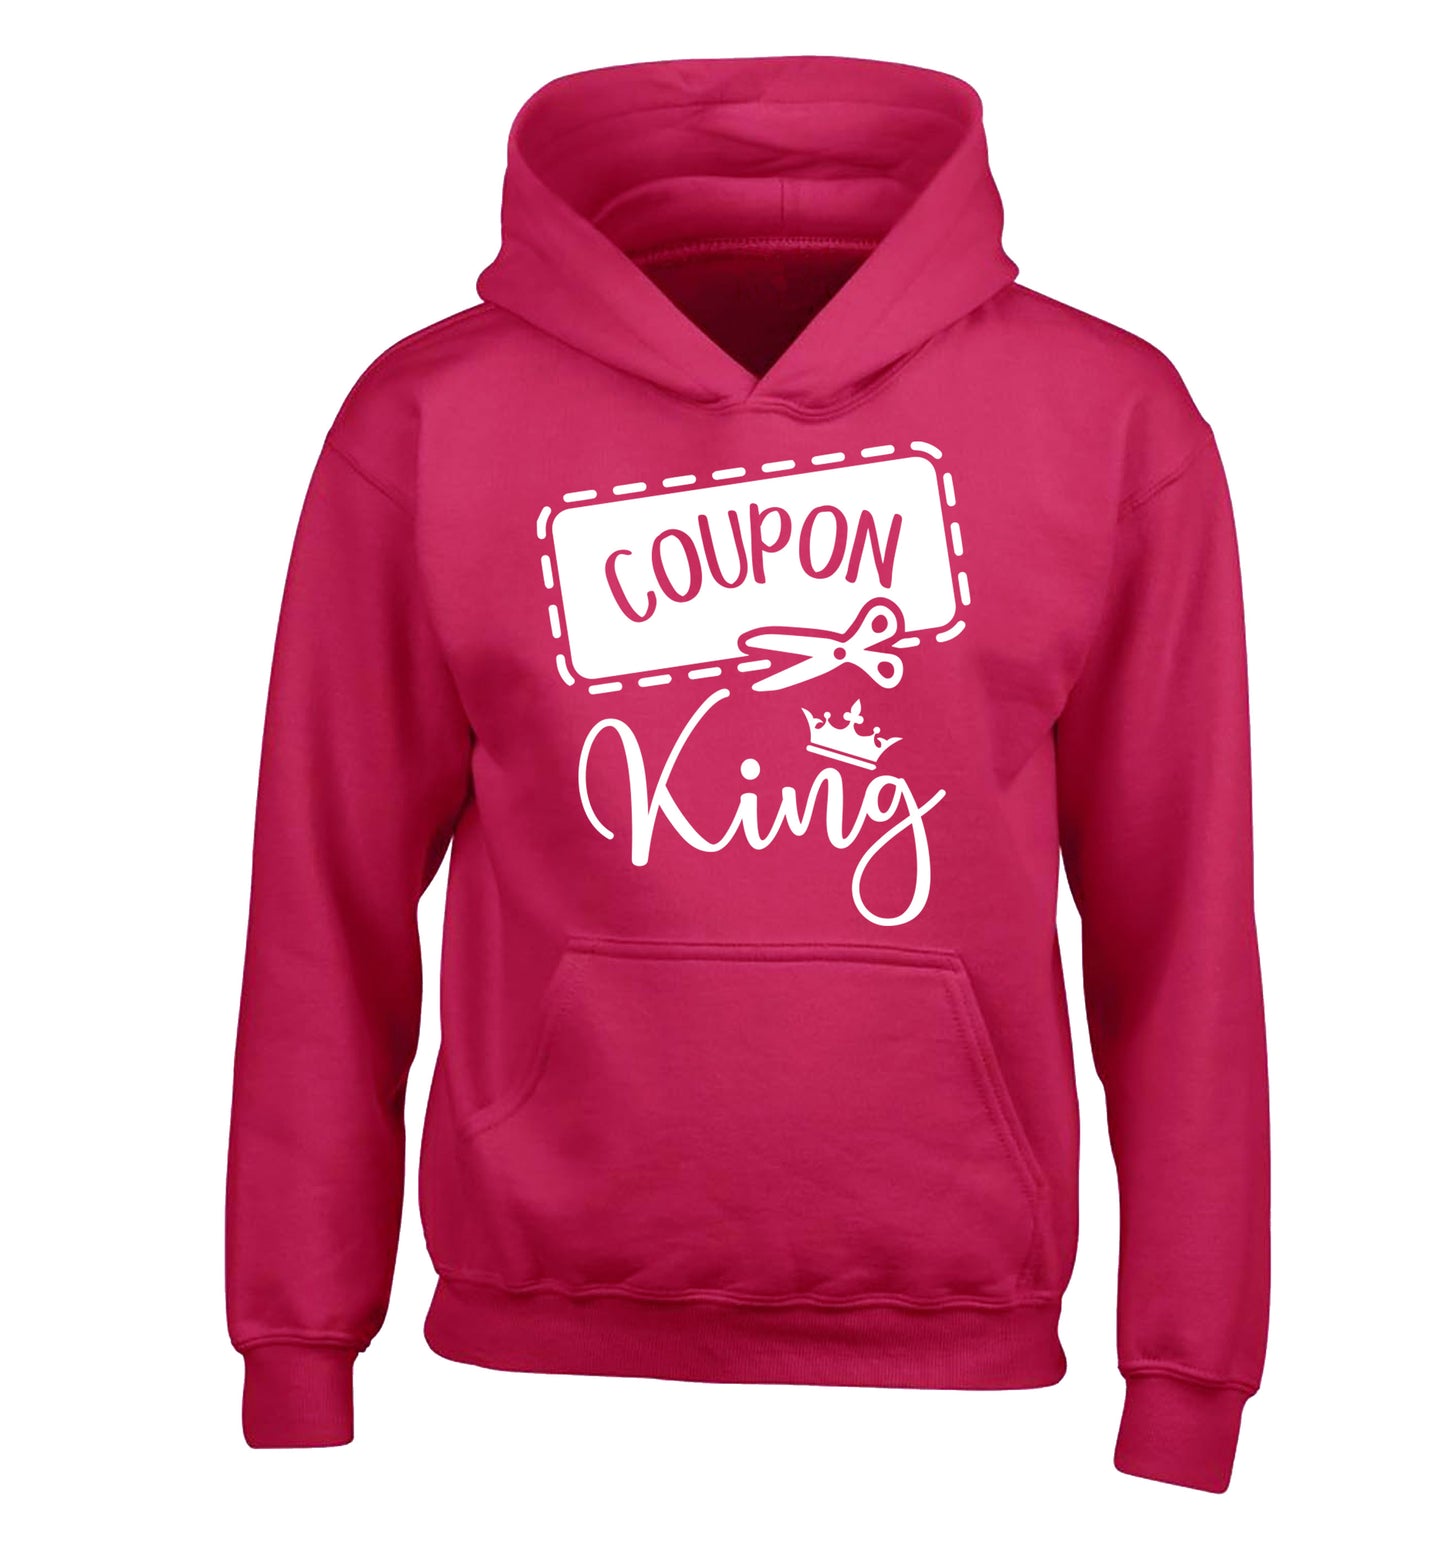 Coupon King children's pink hoodie 12-13 Years